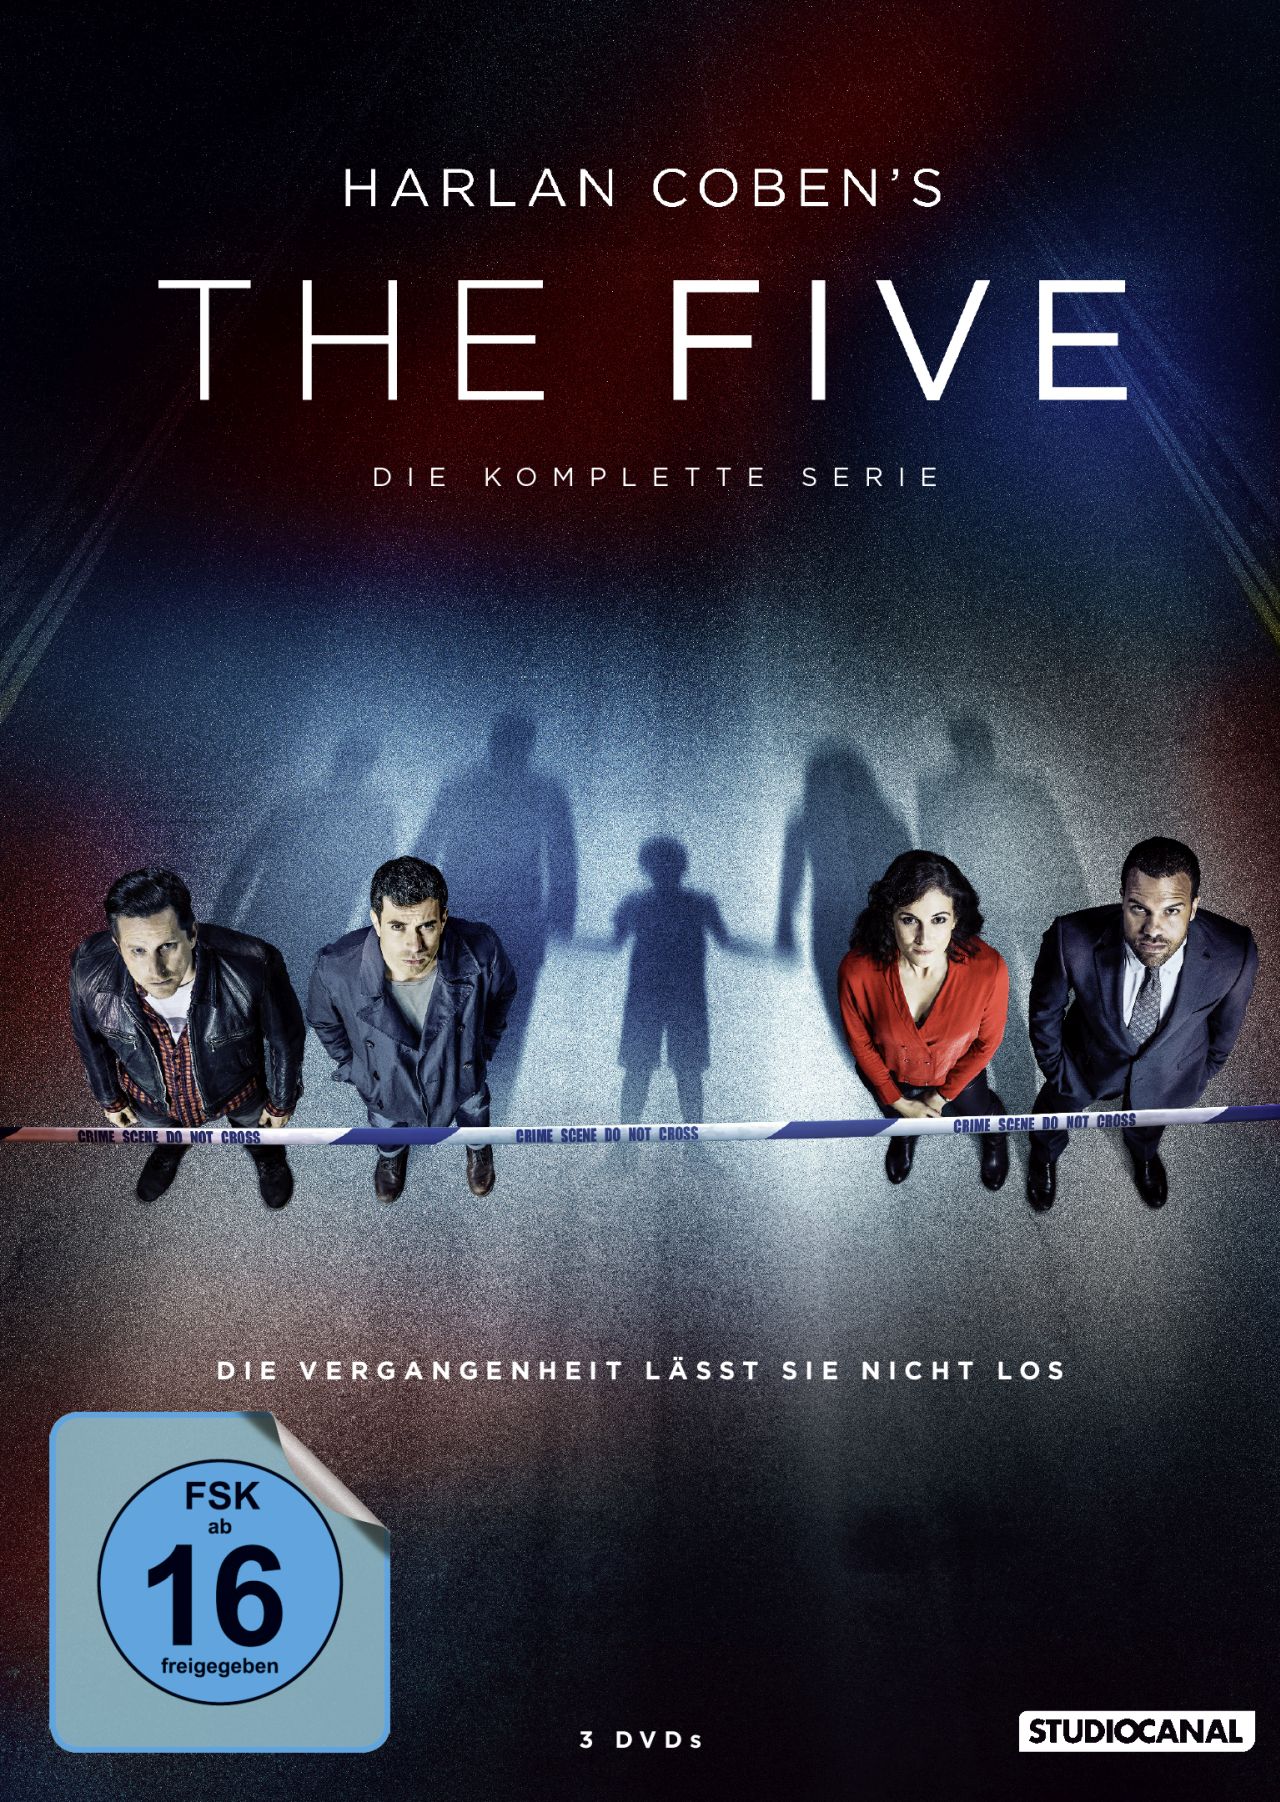 The Five - Die komplette Serie (3 DVDs) Thumbnail 1